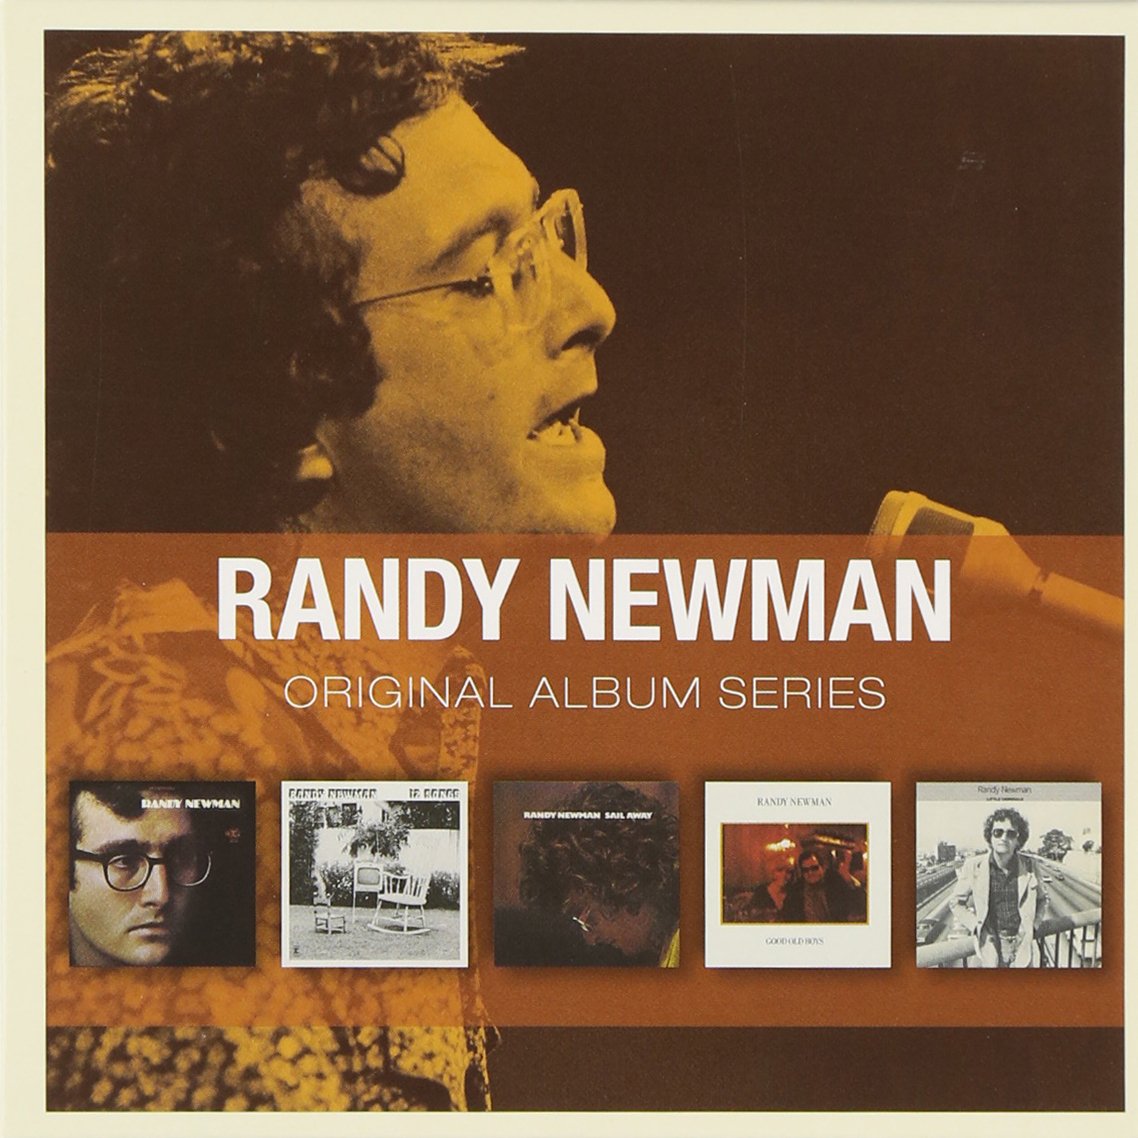 Randy Newman - Original Album Series - 5 CD Set